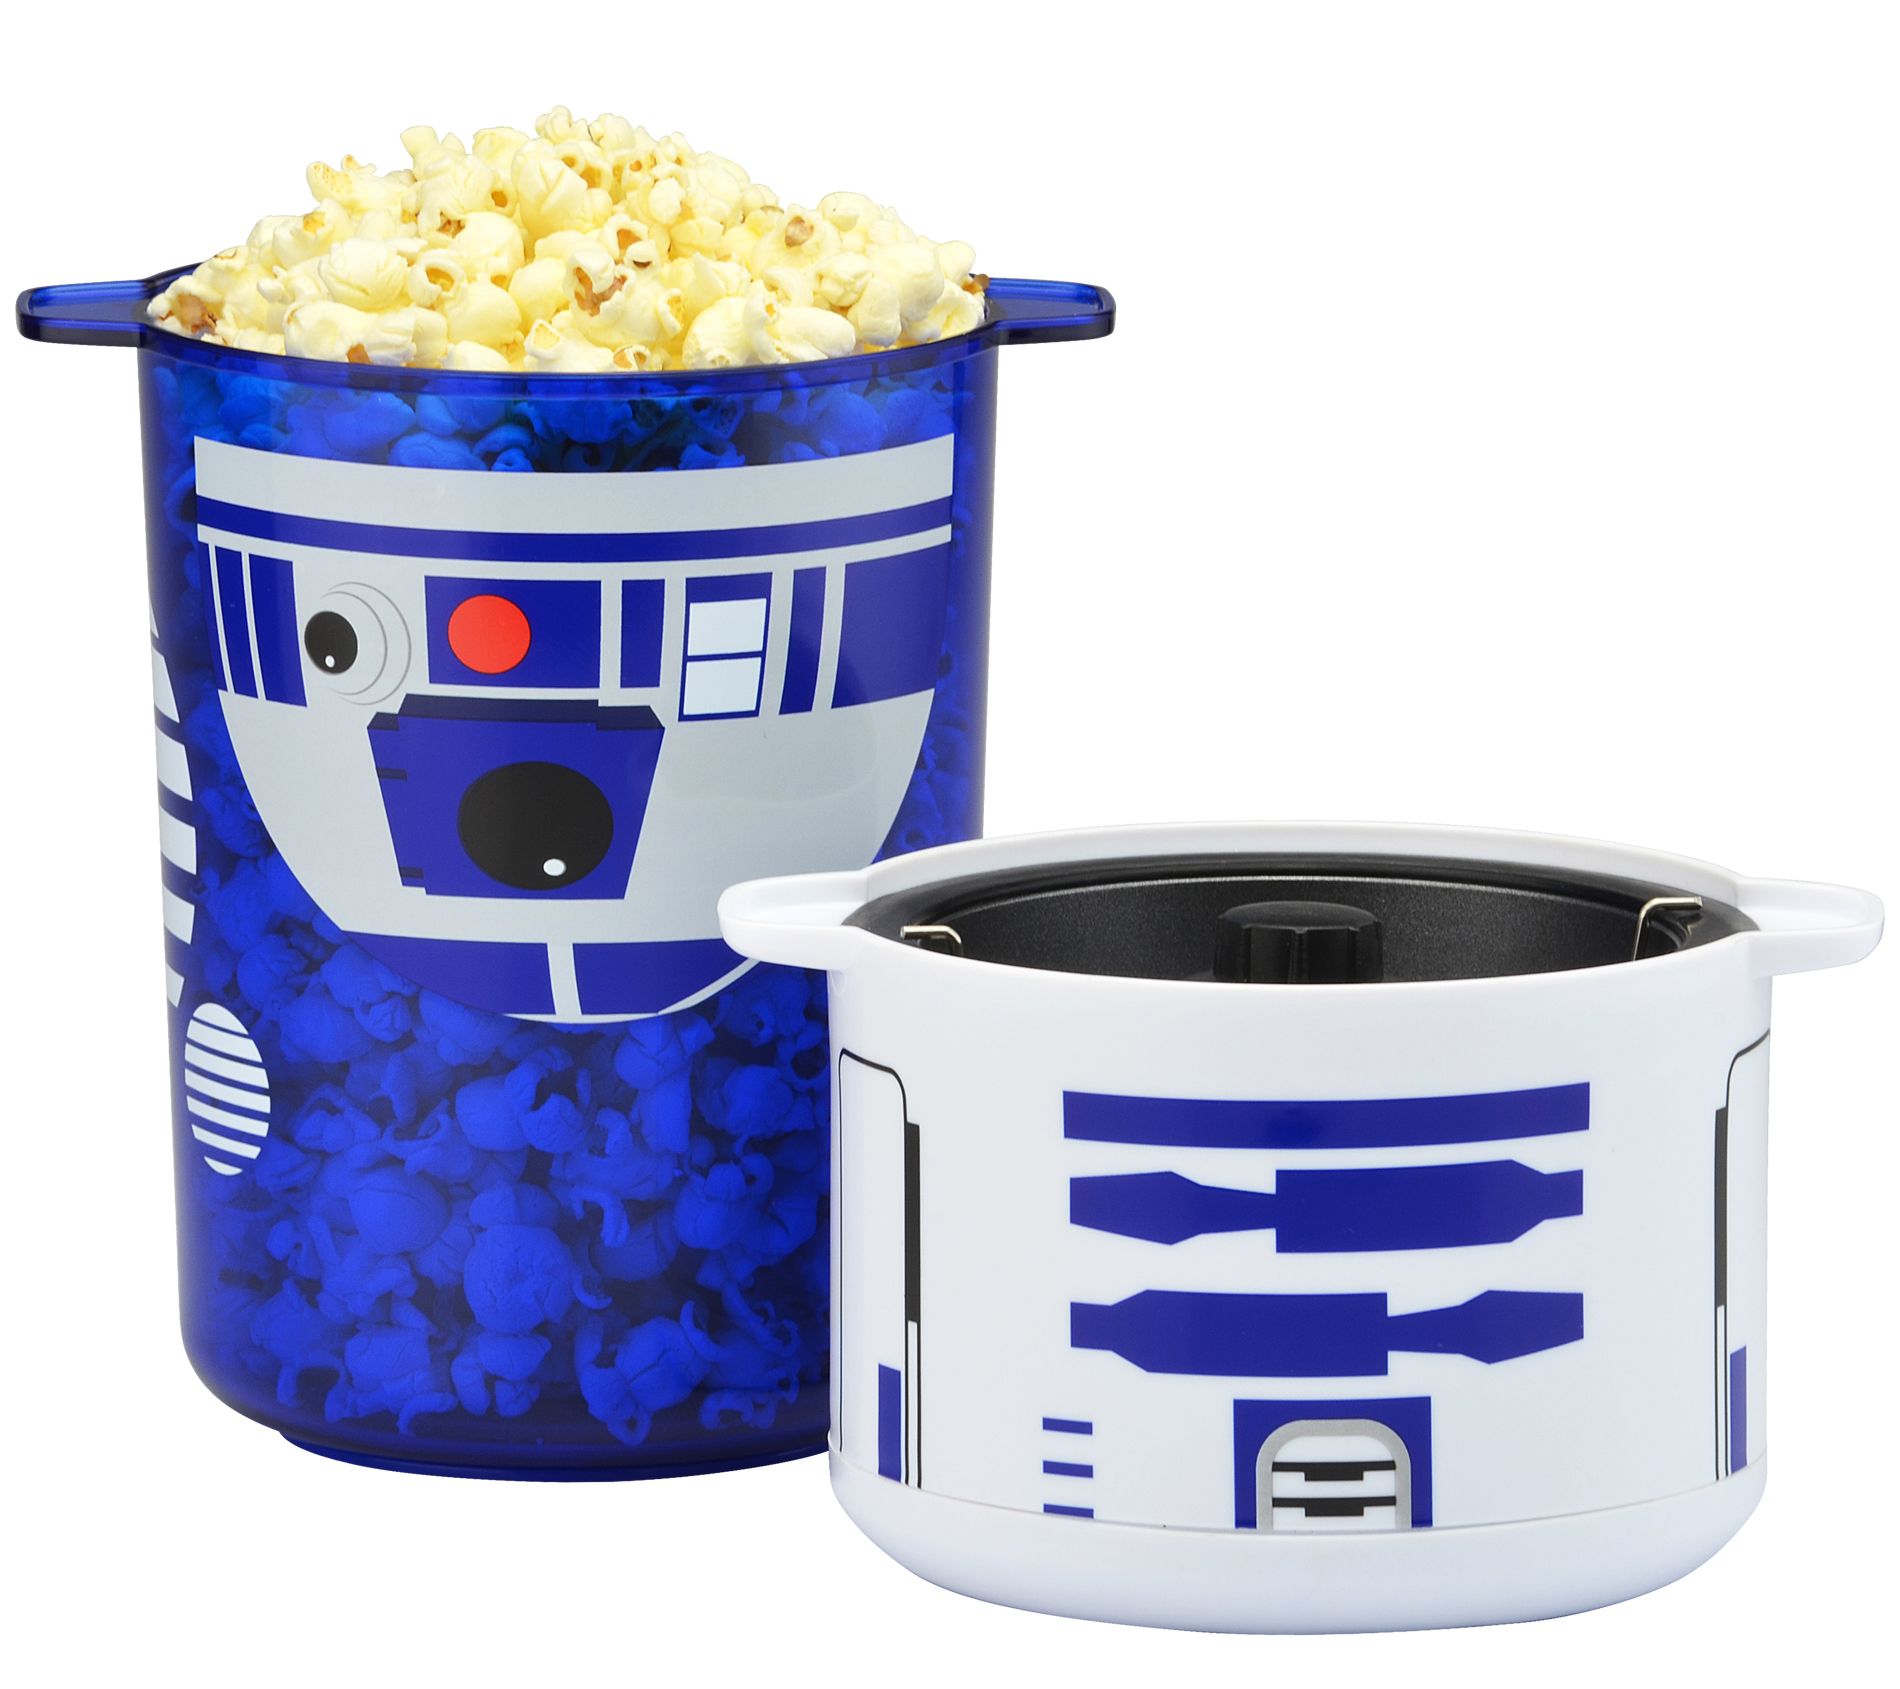 Uncanny Brands Star Wars Death Star Popcorn Maker - Hot Air Style